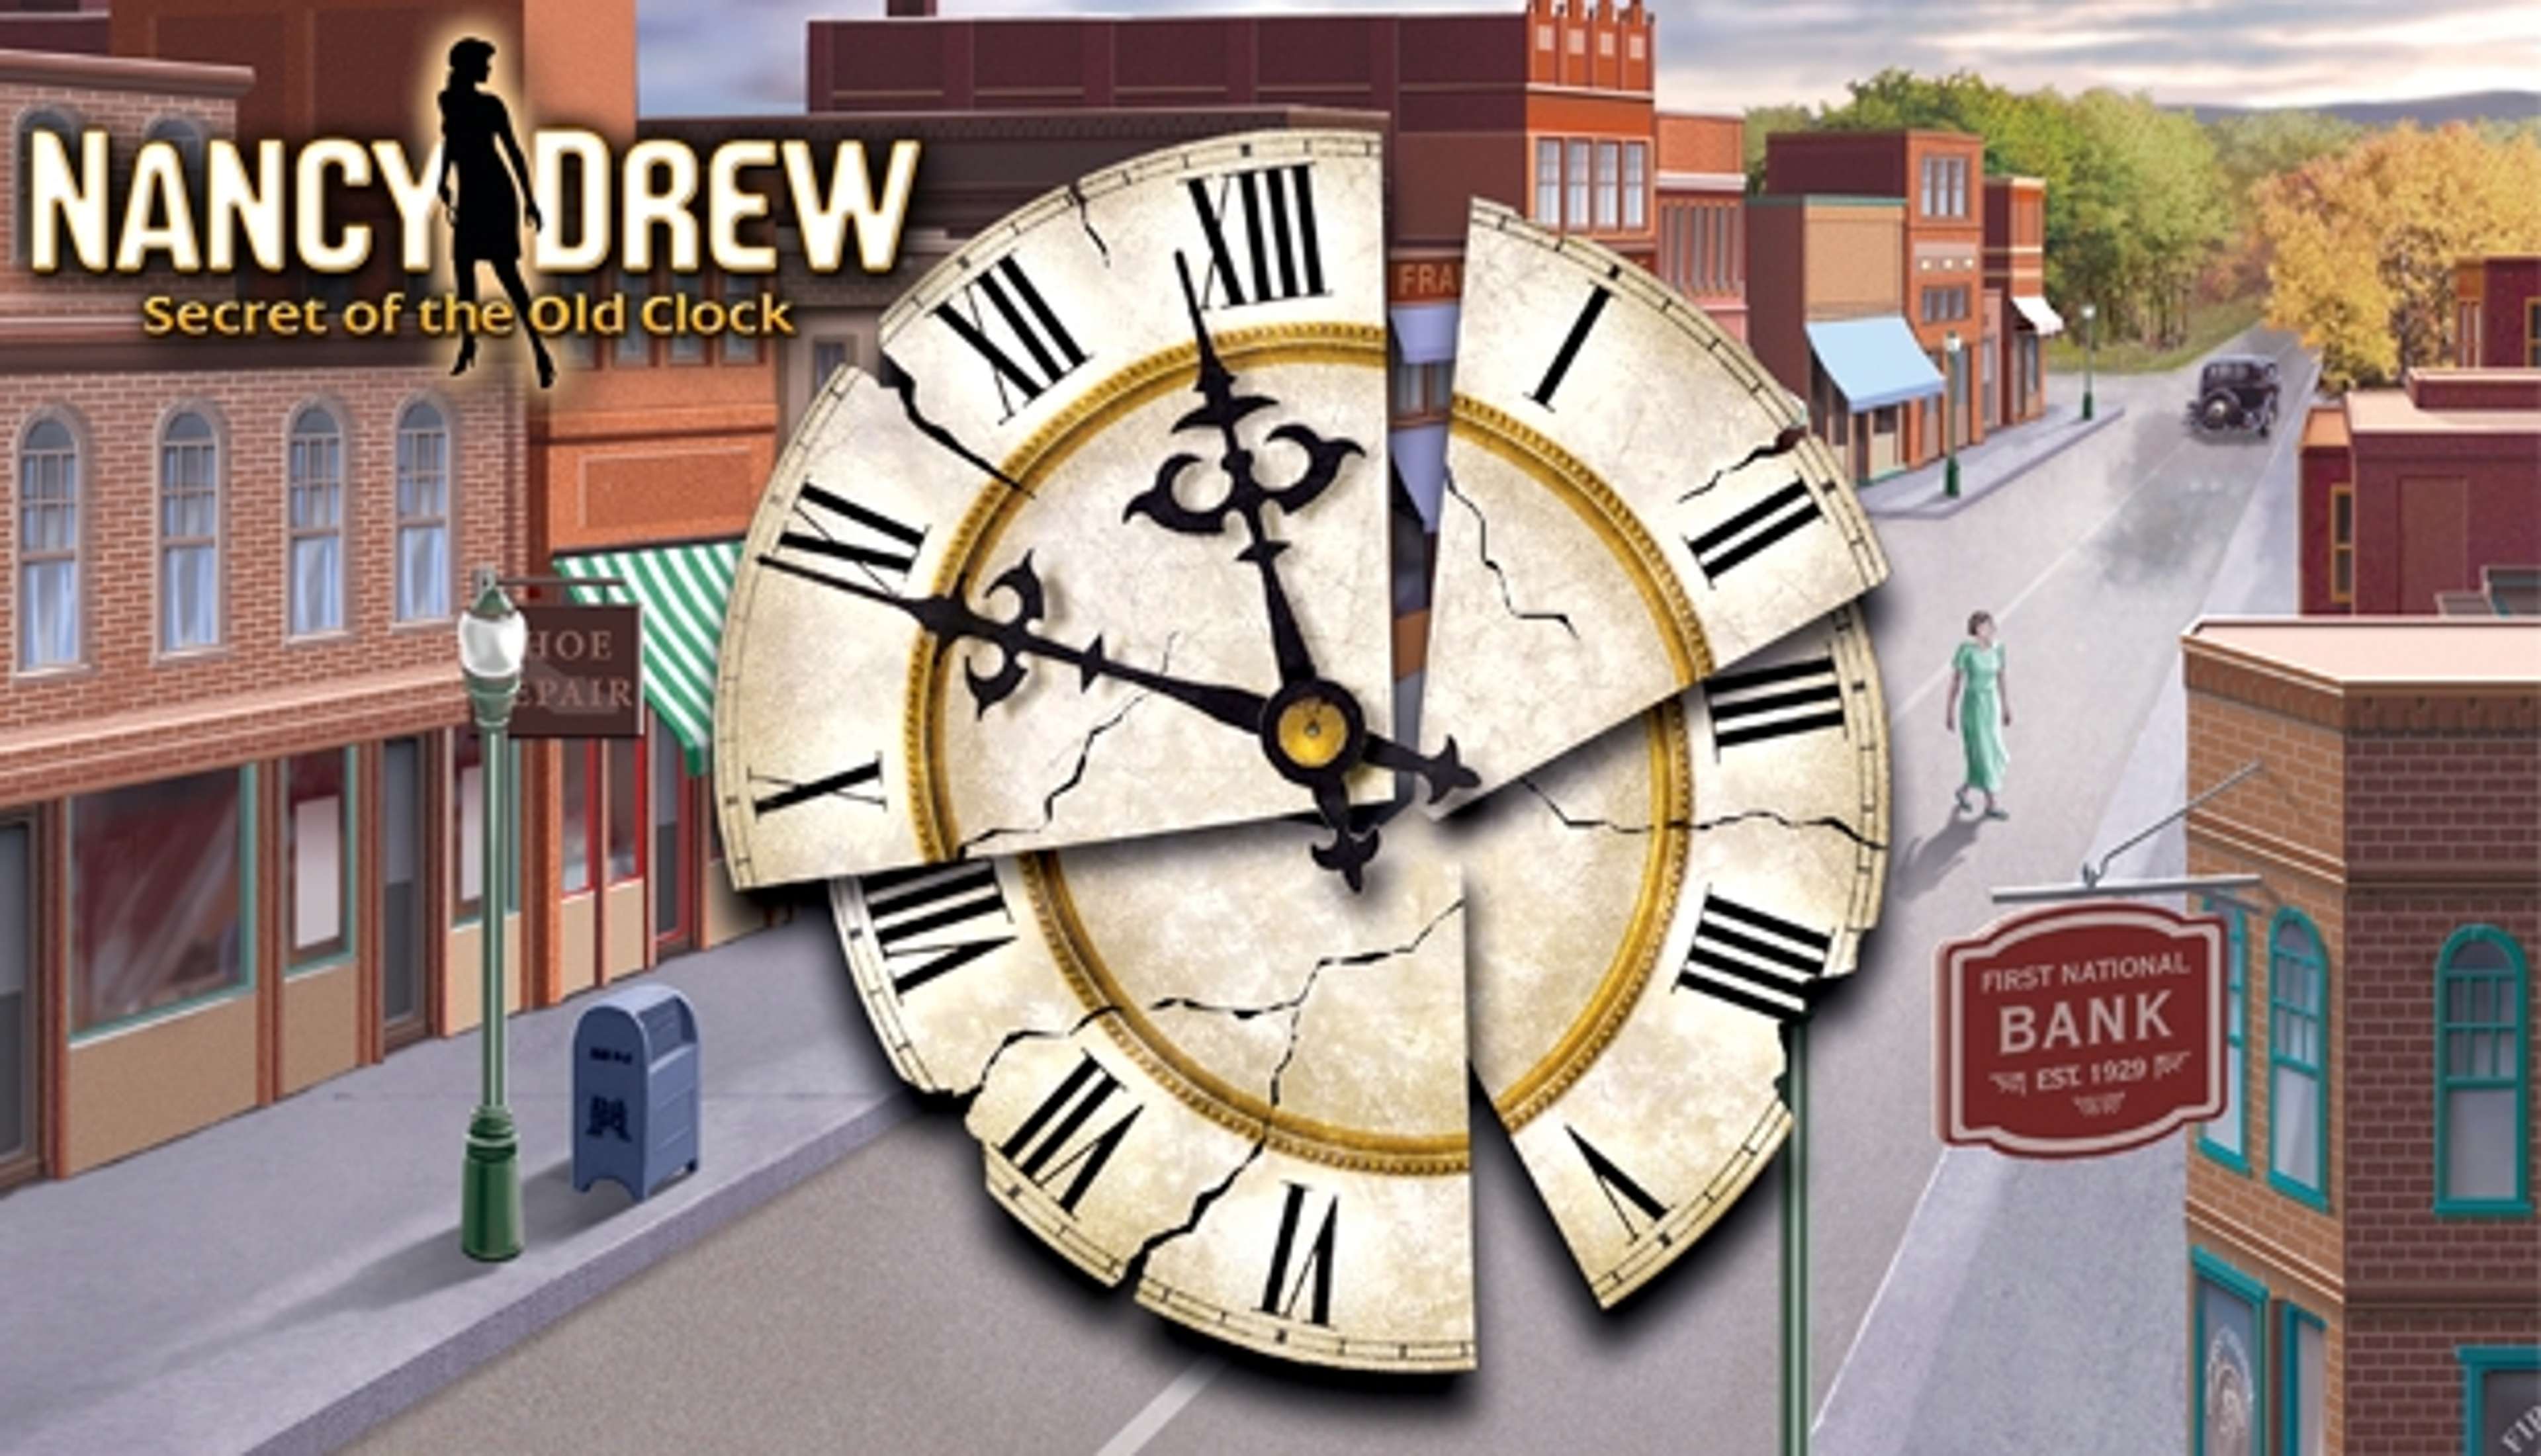 Nancy Drew Secret of the Old Clock (embed only)